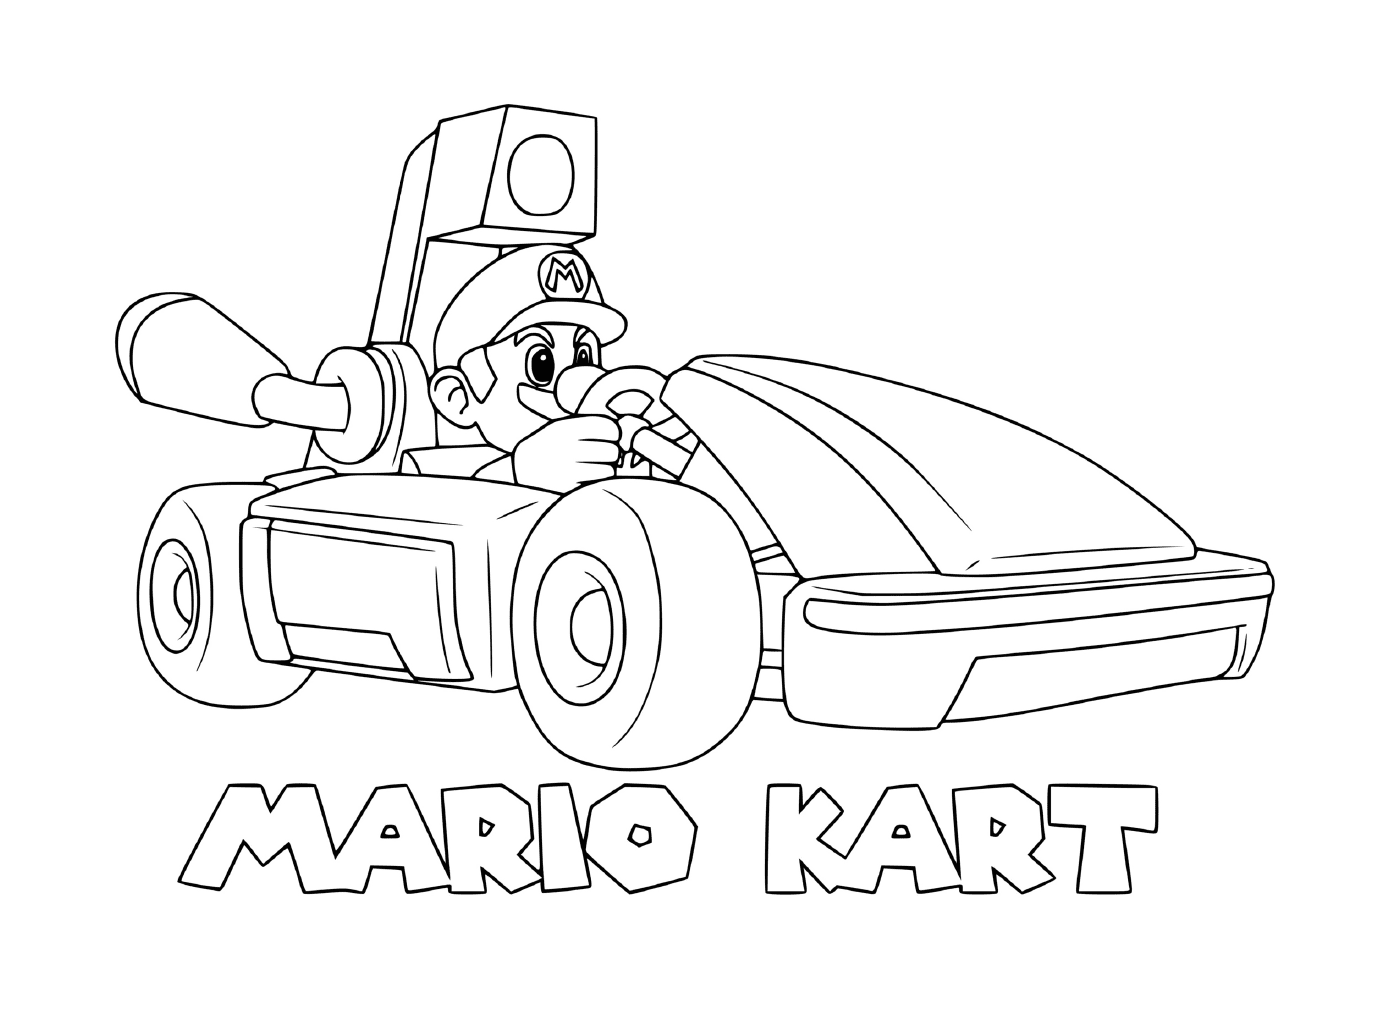  Mario Kart 8 Deluxe, pronto per la gara di Formula 1 